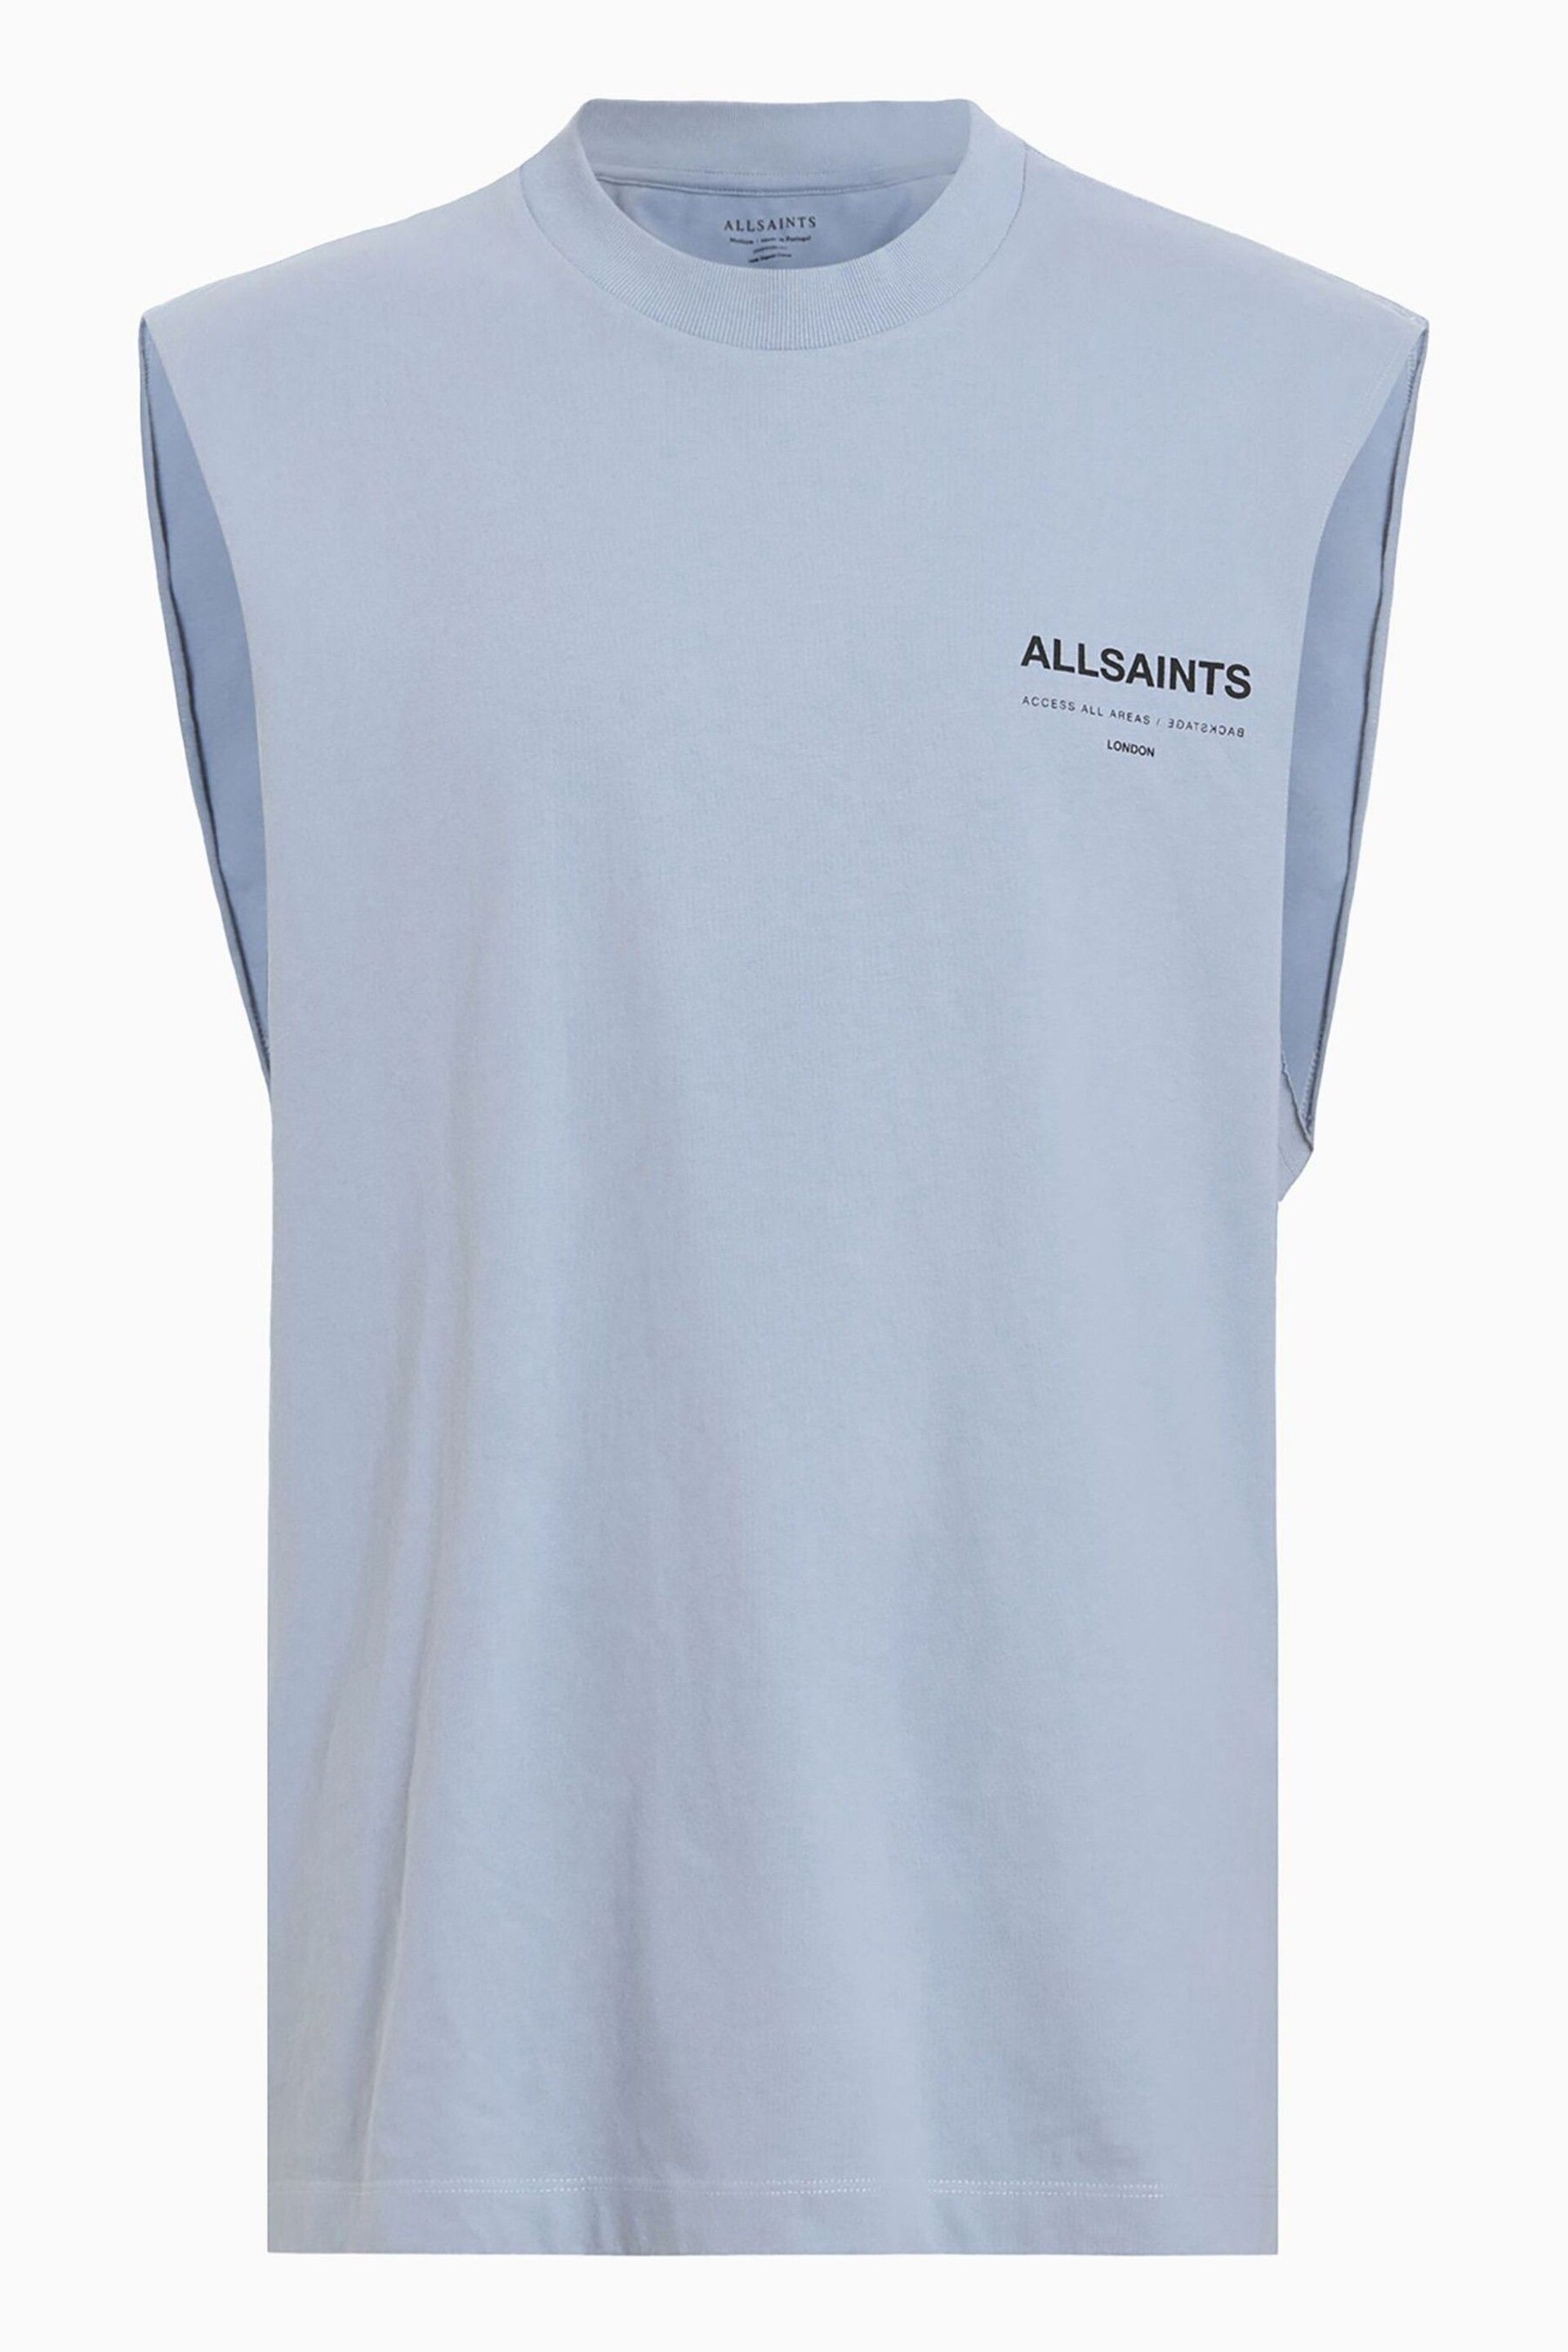 AllSaints Blue Access Sleeveless Crew T-Shirt - Image 8 of 8